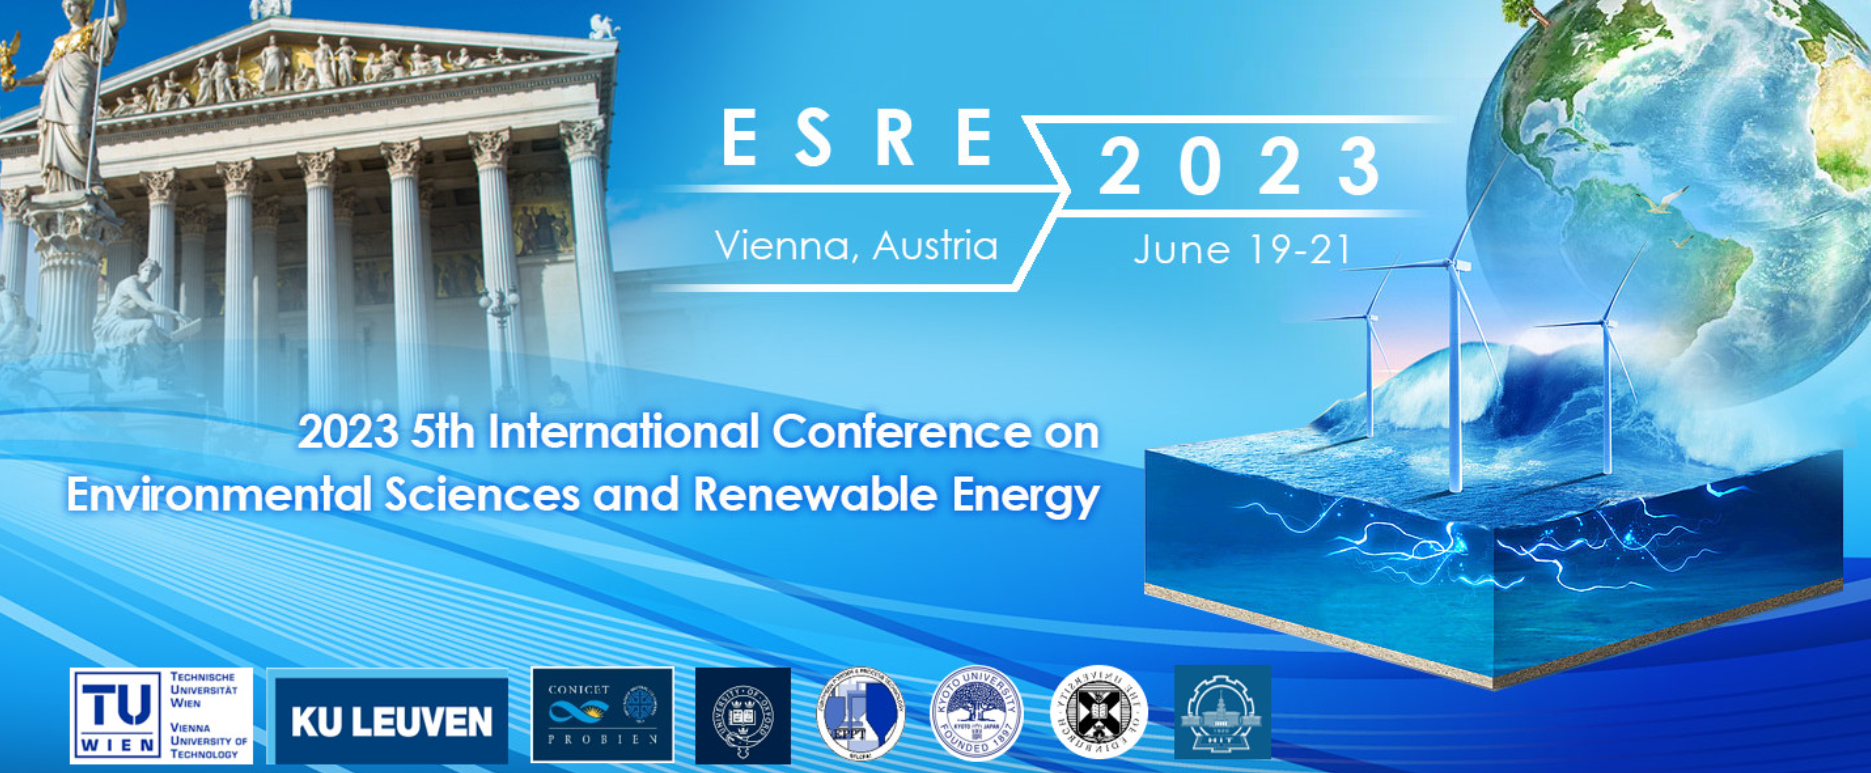 Conference ESRE 2023, Vienna, Austria